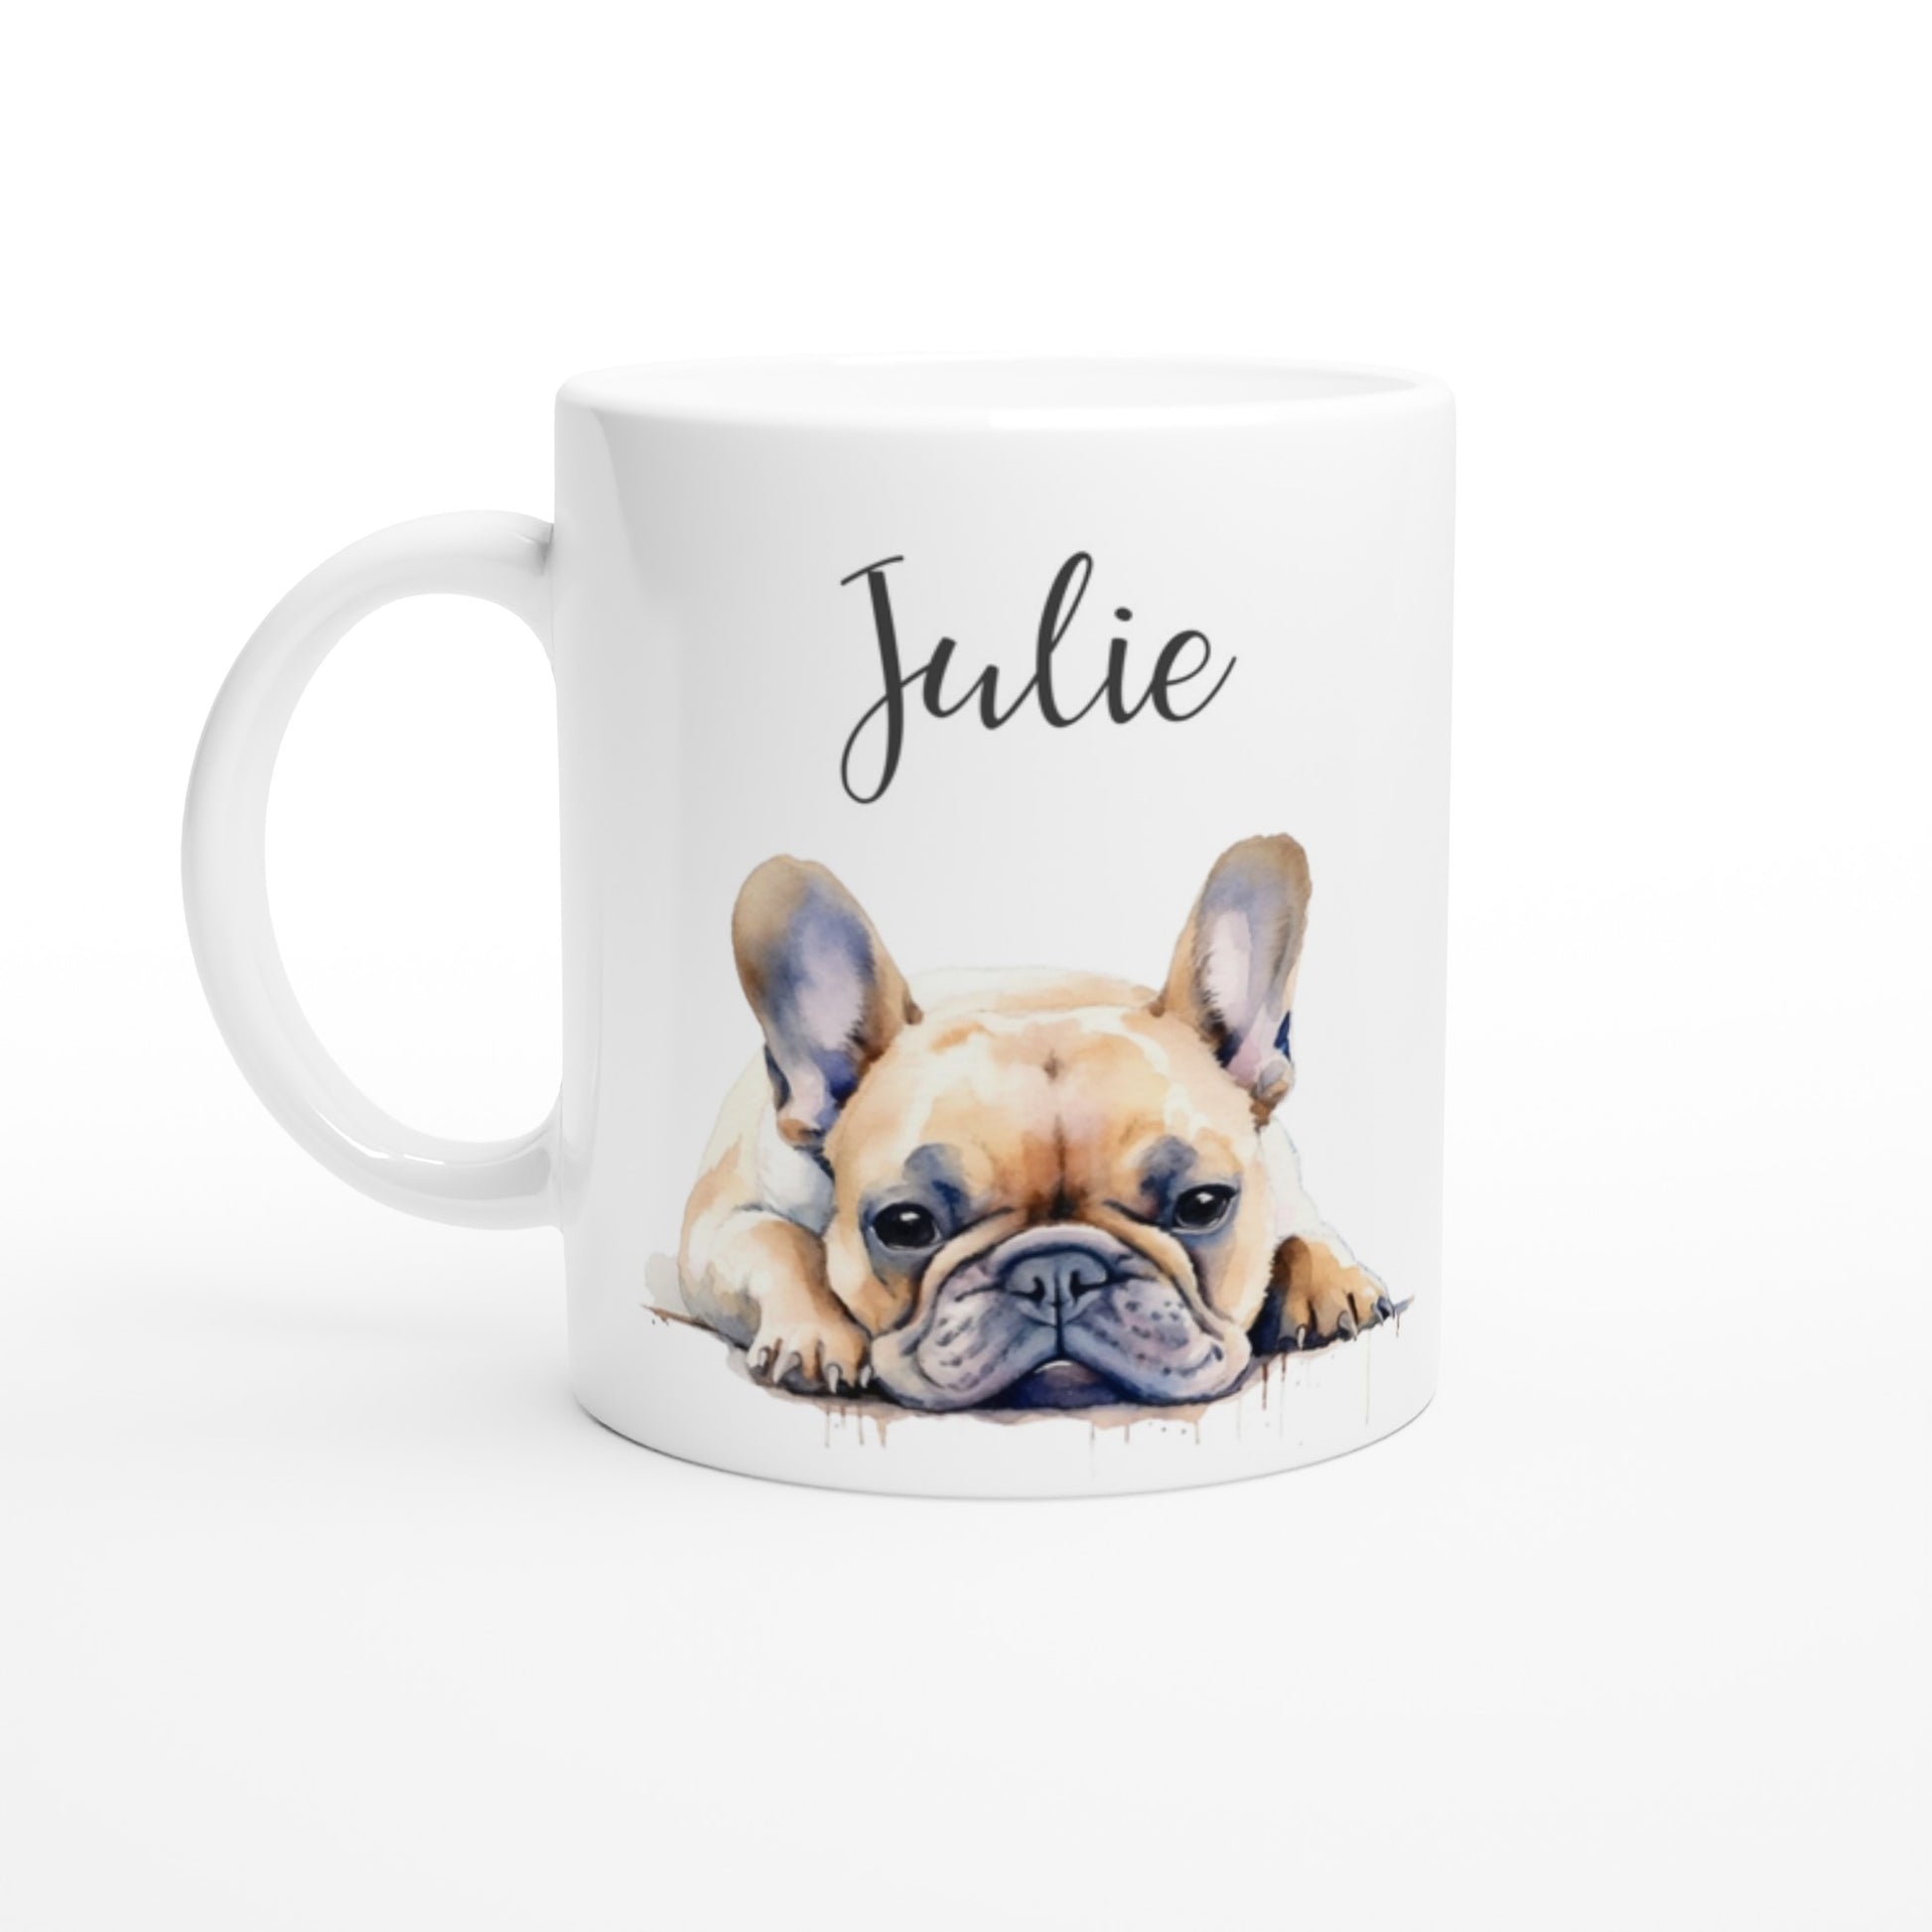 Personalised French bulldog mug with name